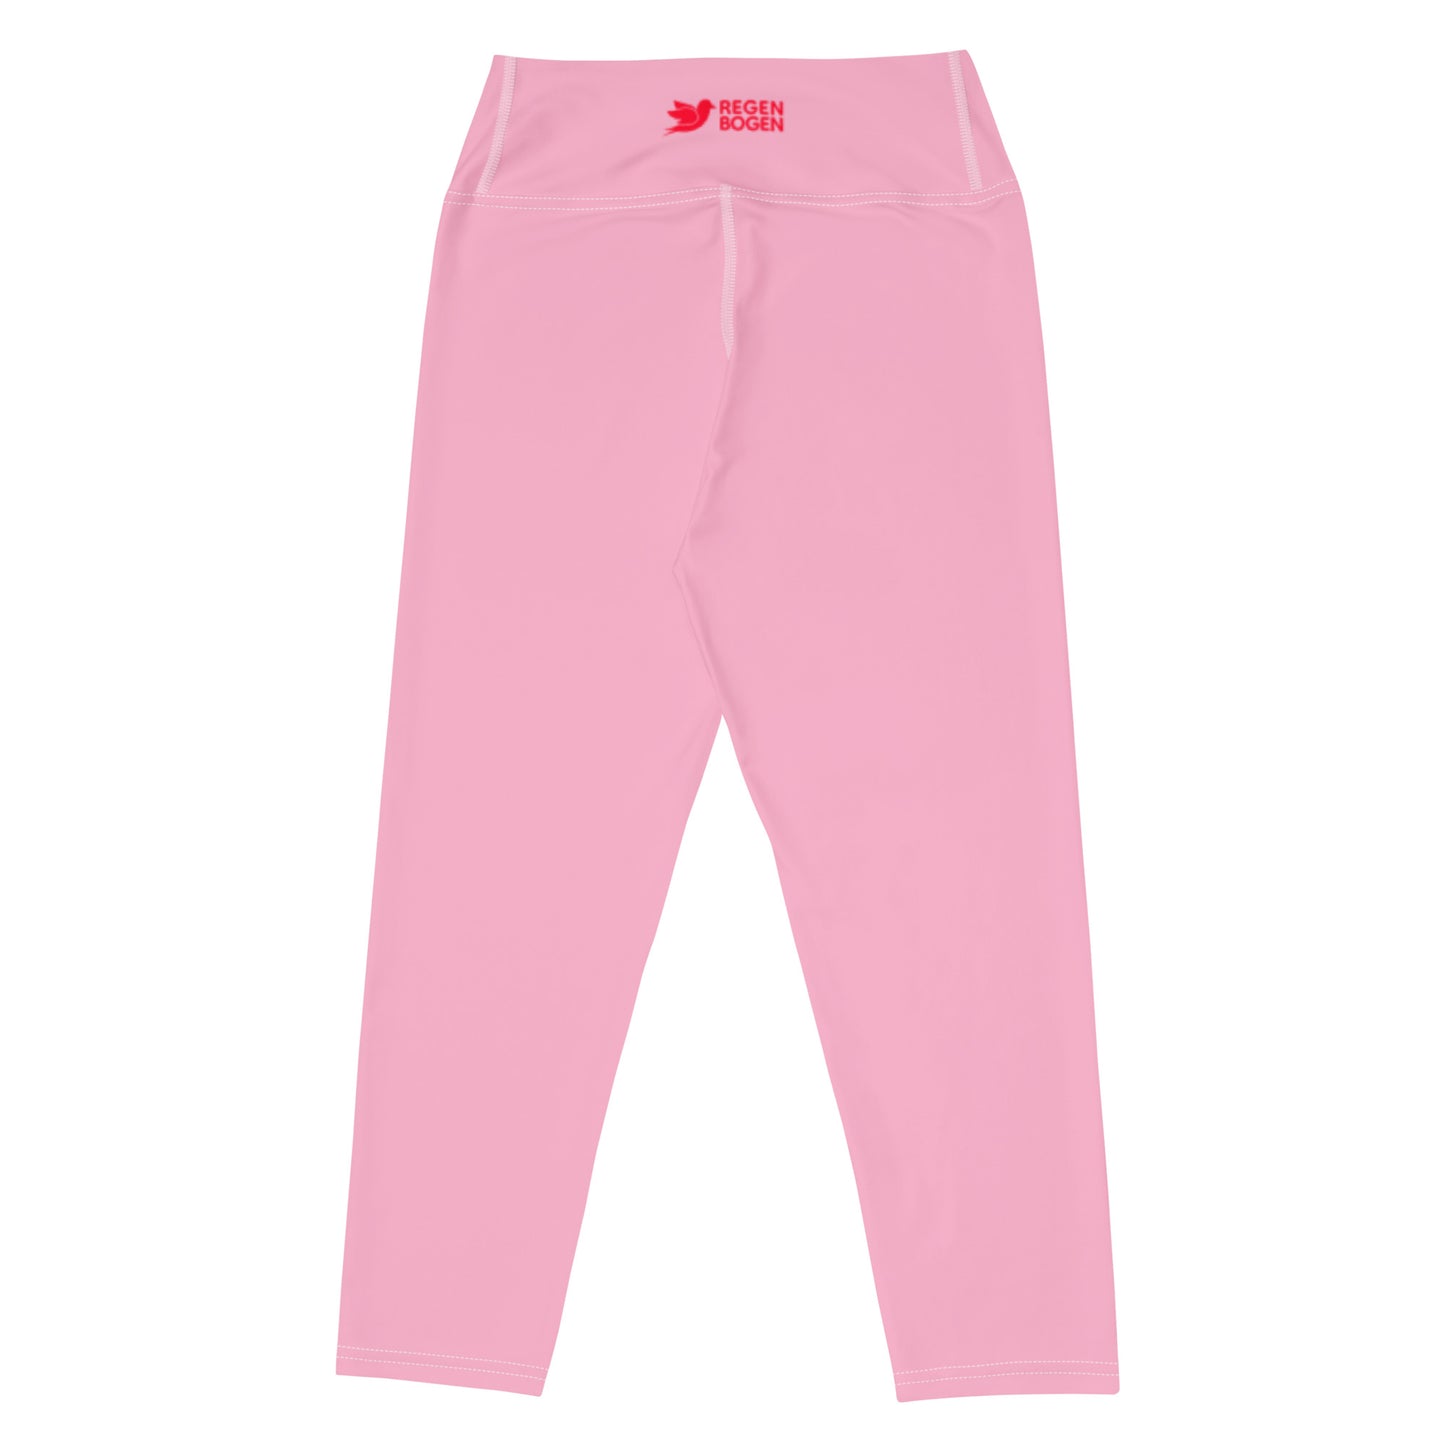 Garten Solid Pink Capri High Waist Yoga Leggings / Pants with Inside Pocket